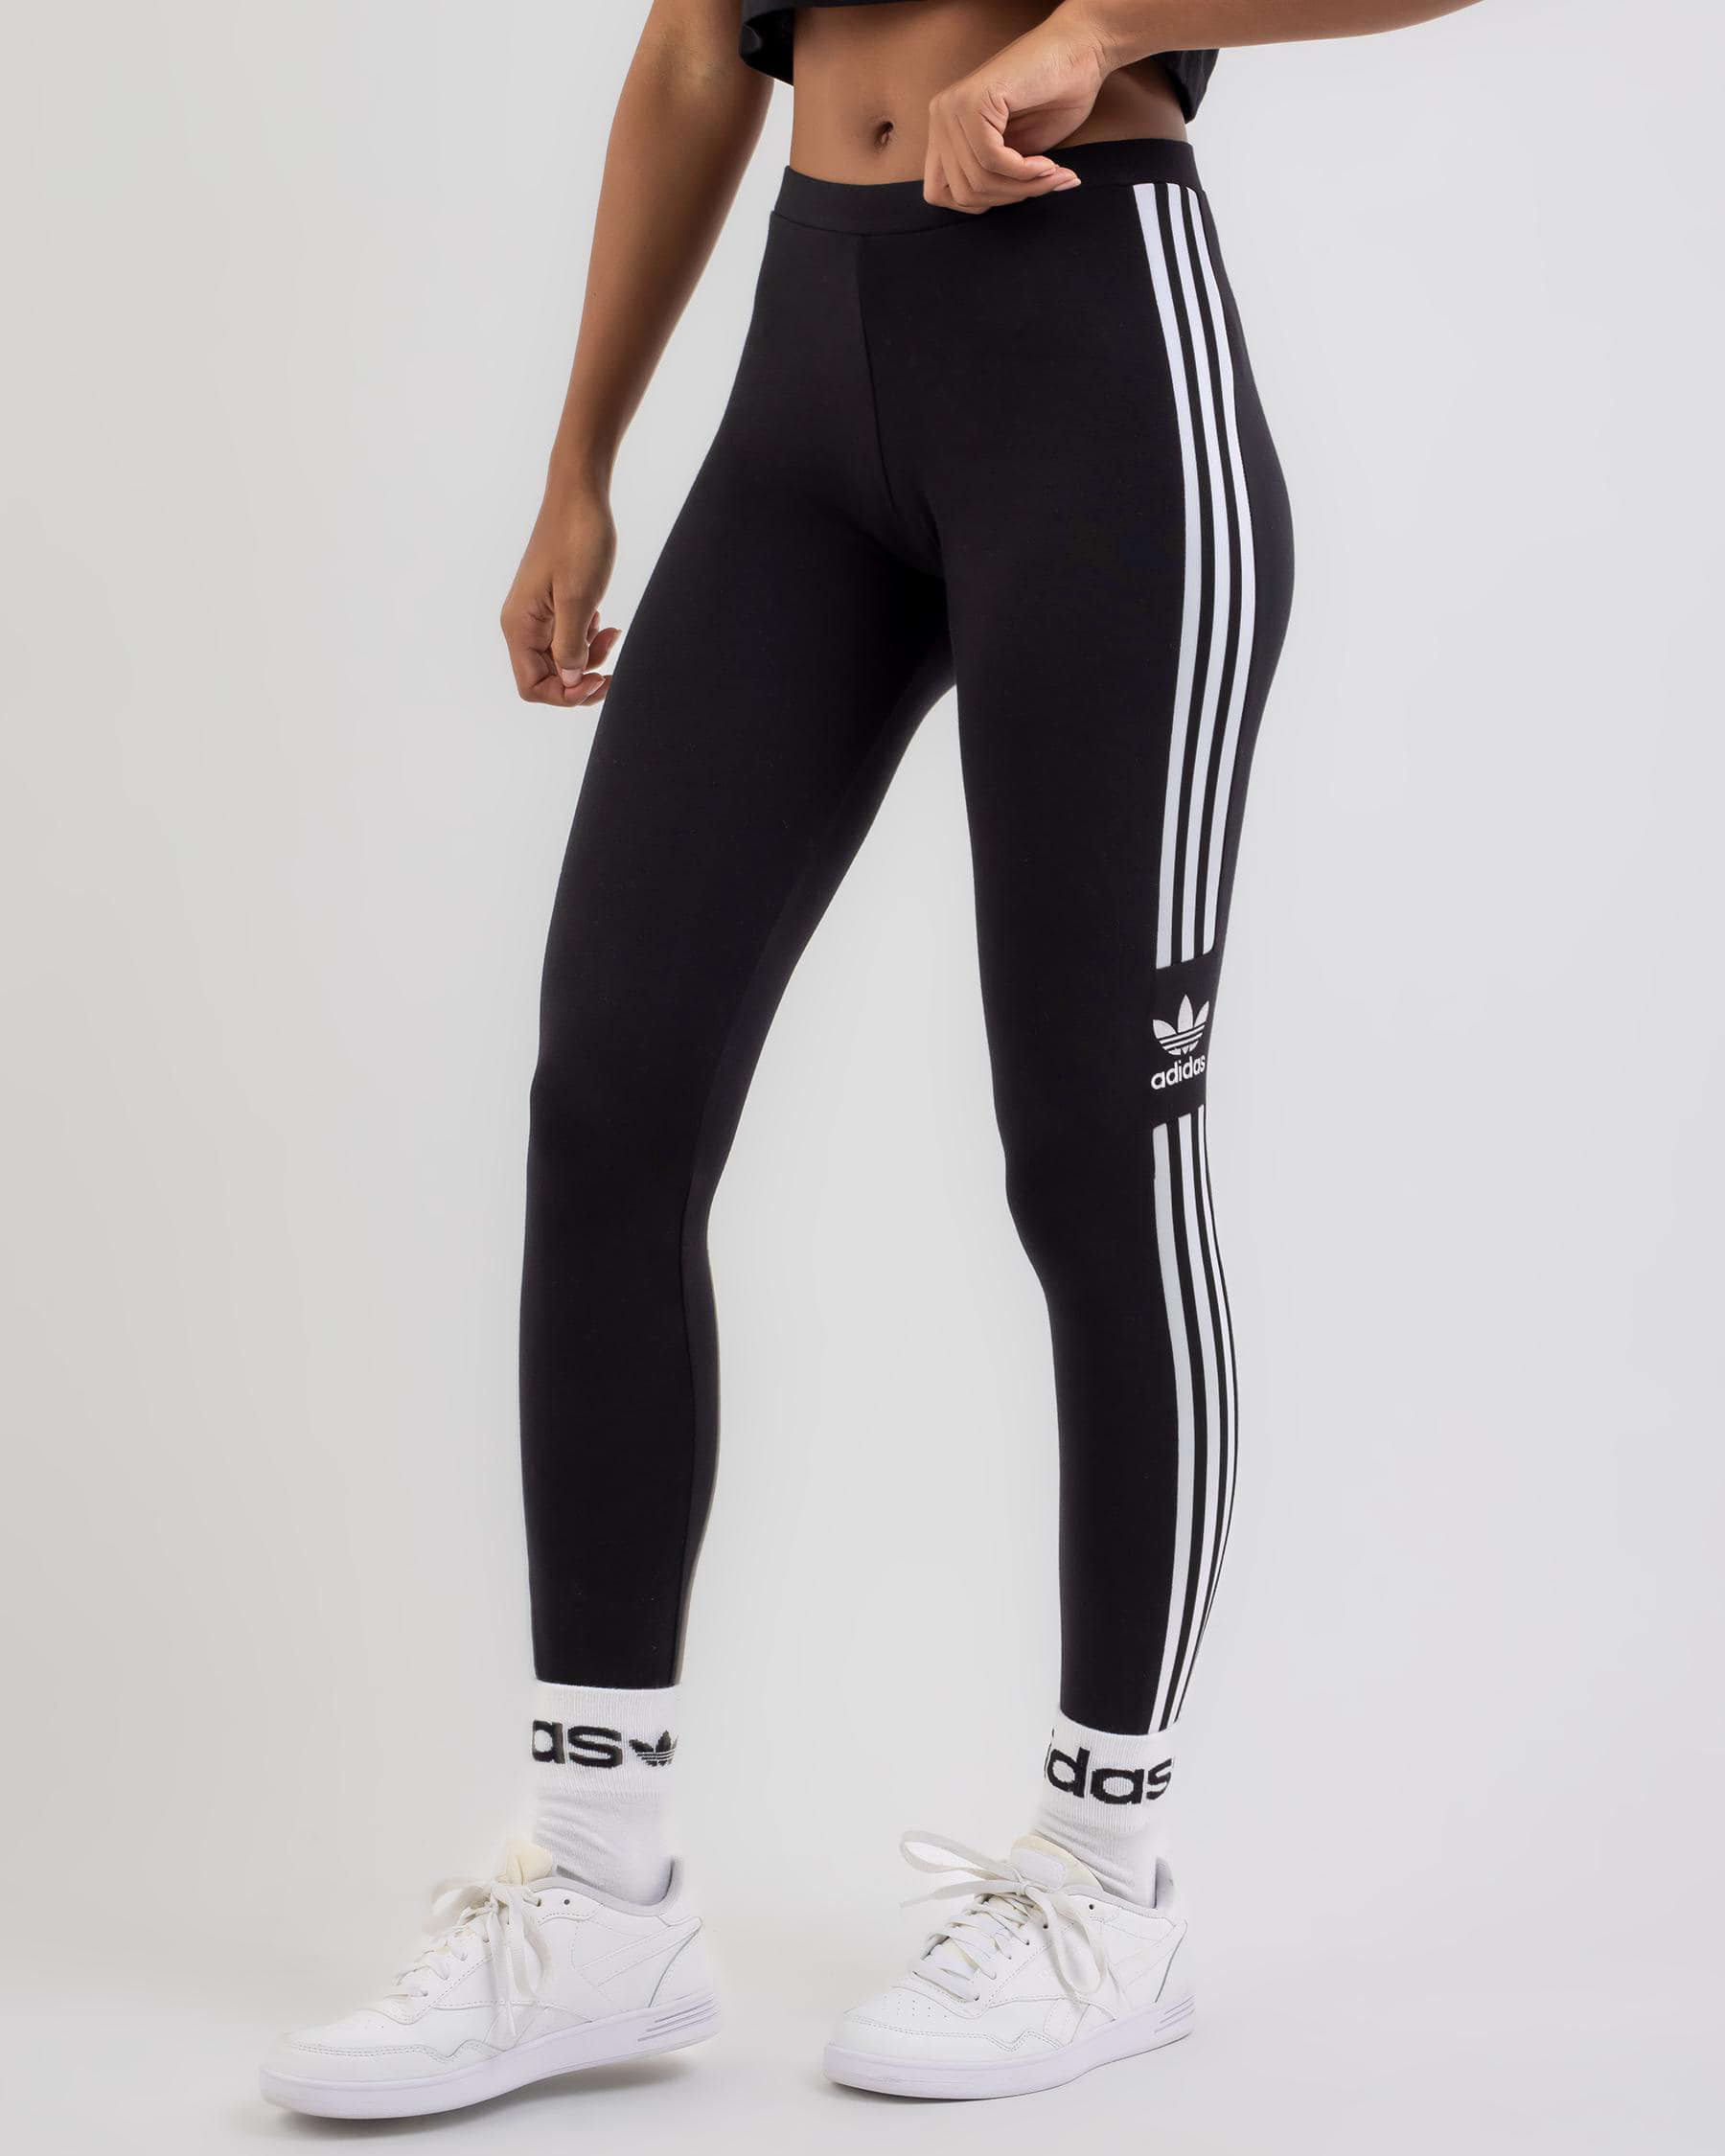 Adidas Originals Black/White 3 Stripe Women's Leggings (XL) New